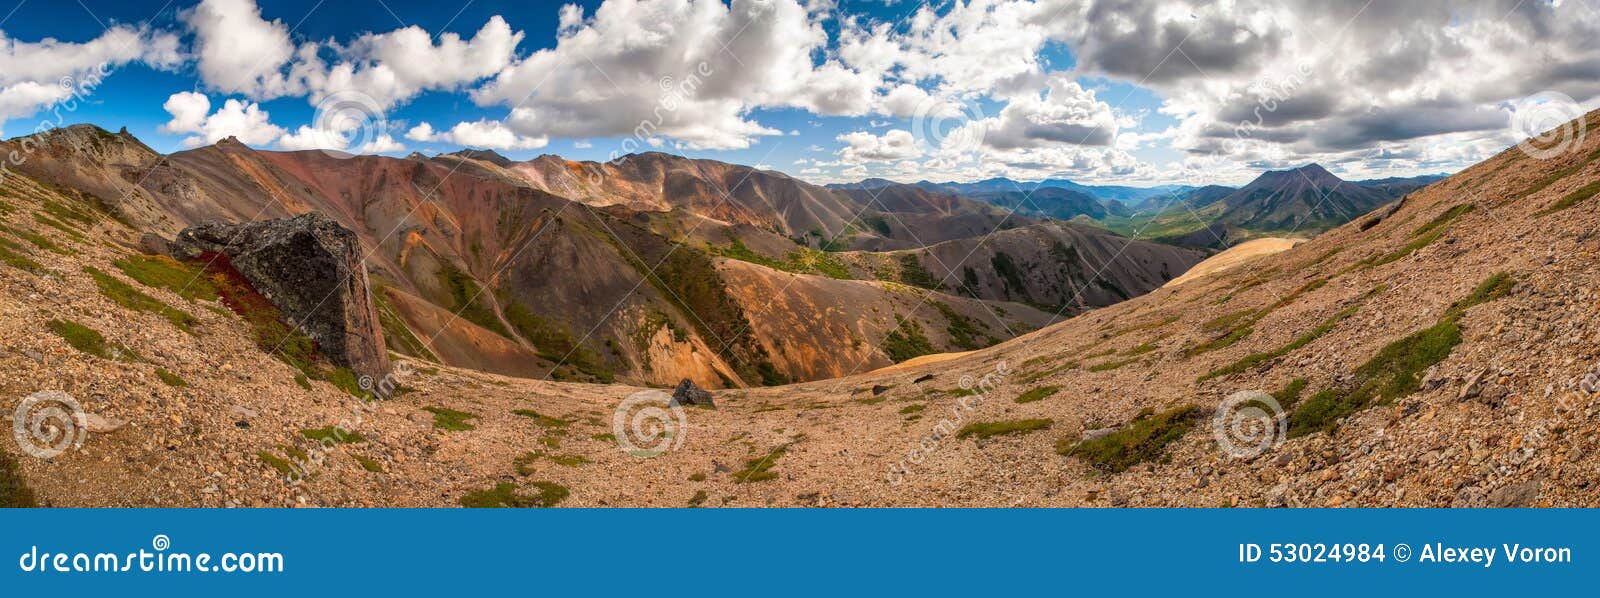 Colored mountain stock photo. Image of peak, altitude - 53024984